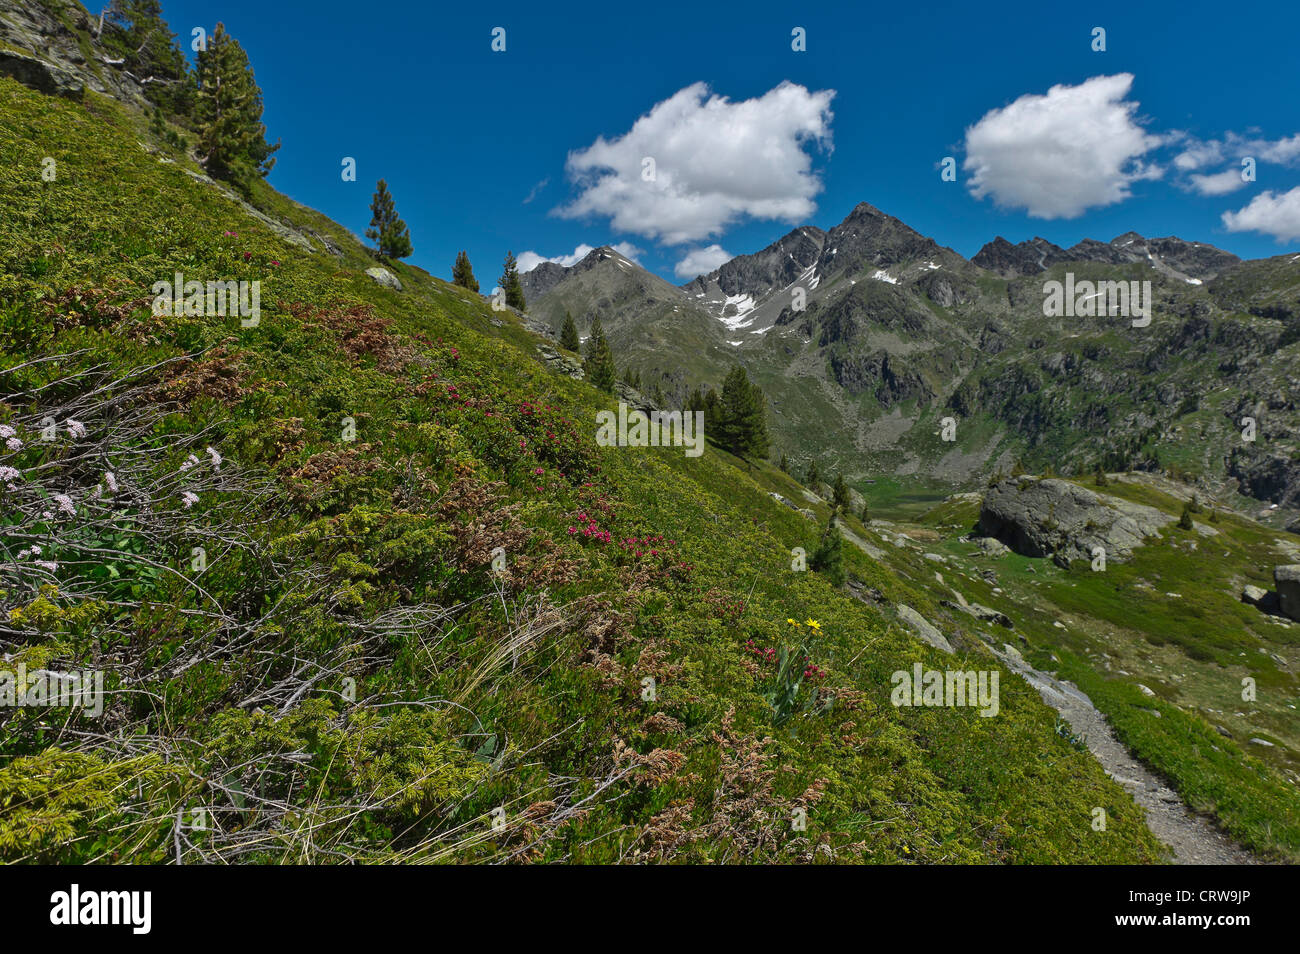 Alpine landscape near the Bellacomba lakes, Aosta valley, Italy Stock Photo